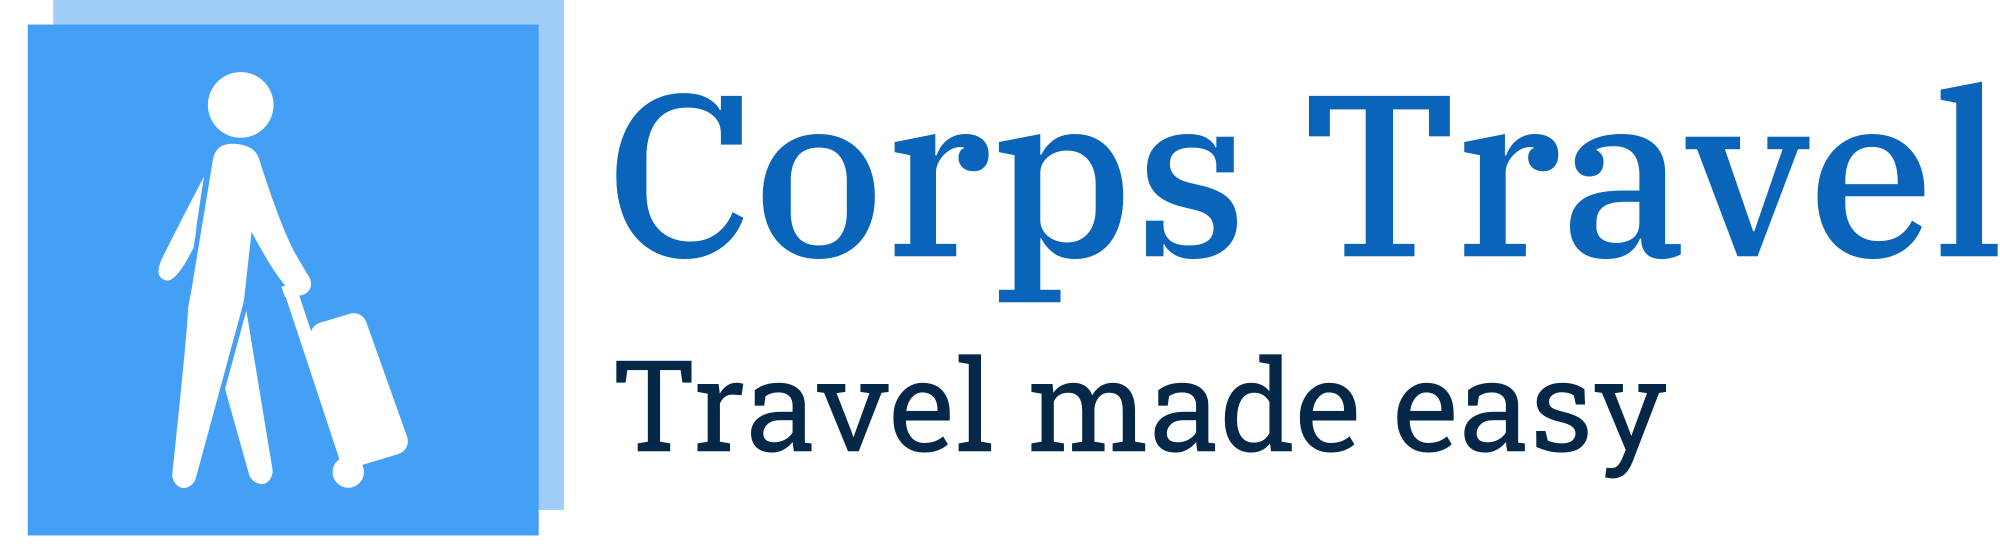 Corps Travel